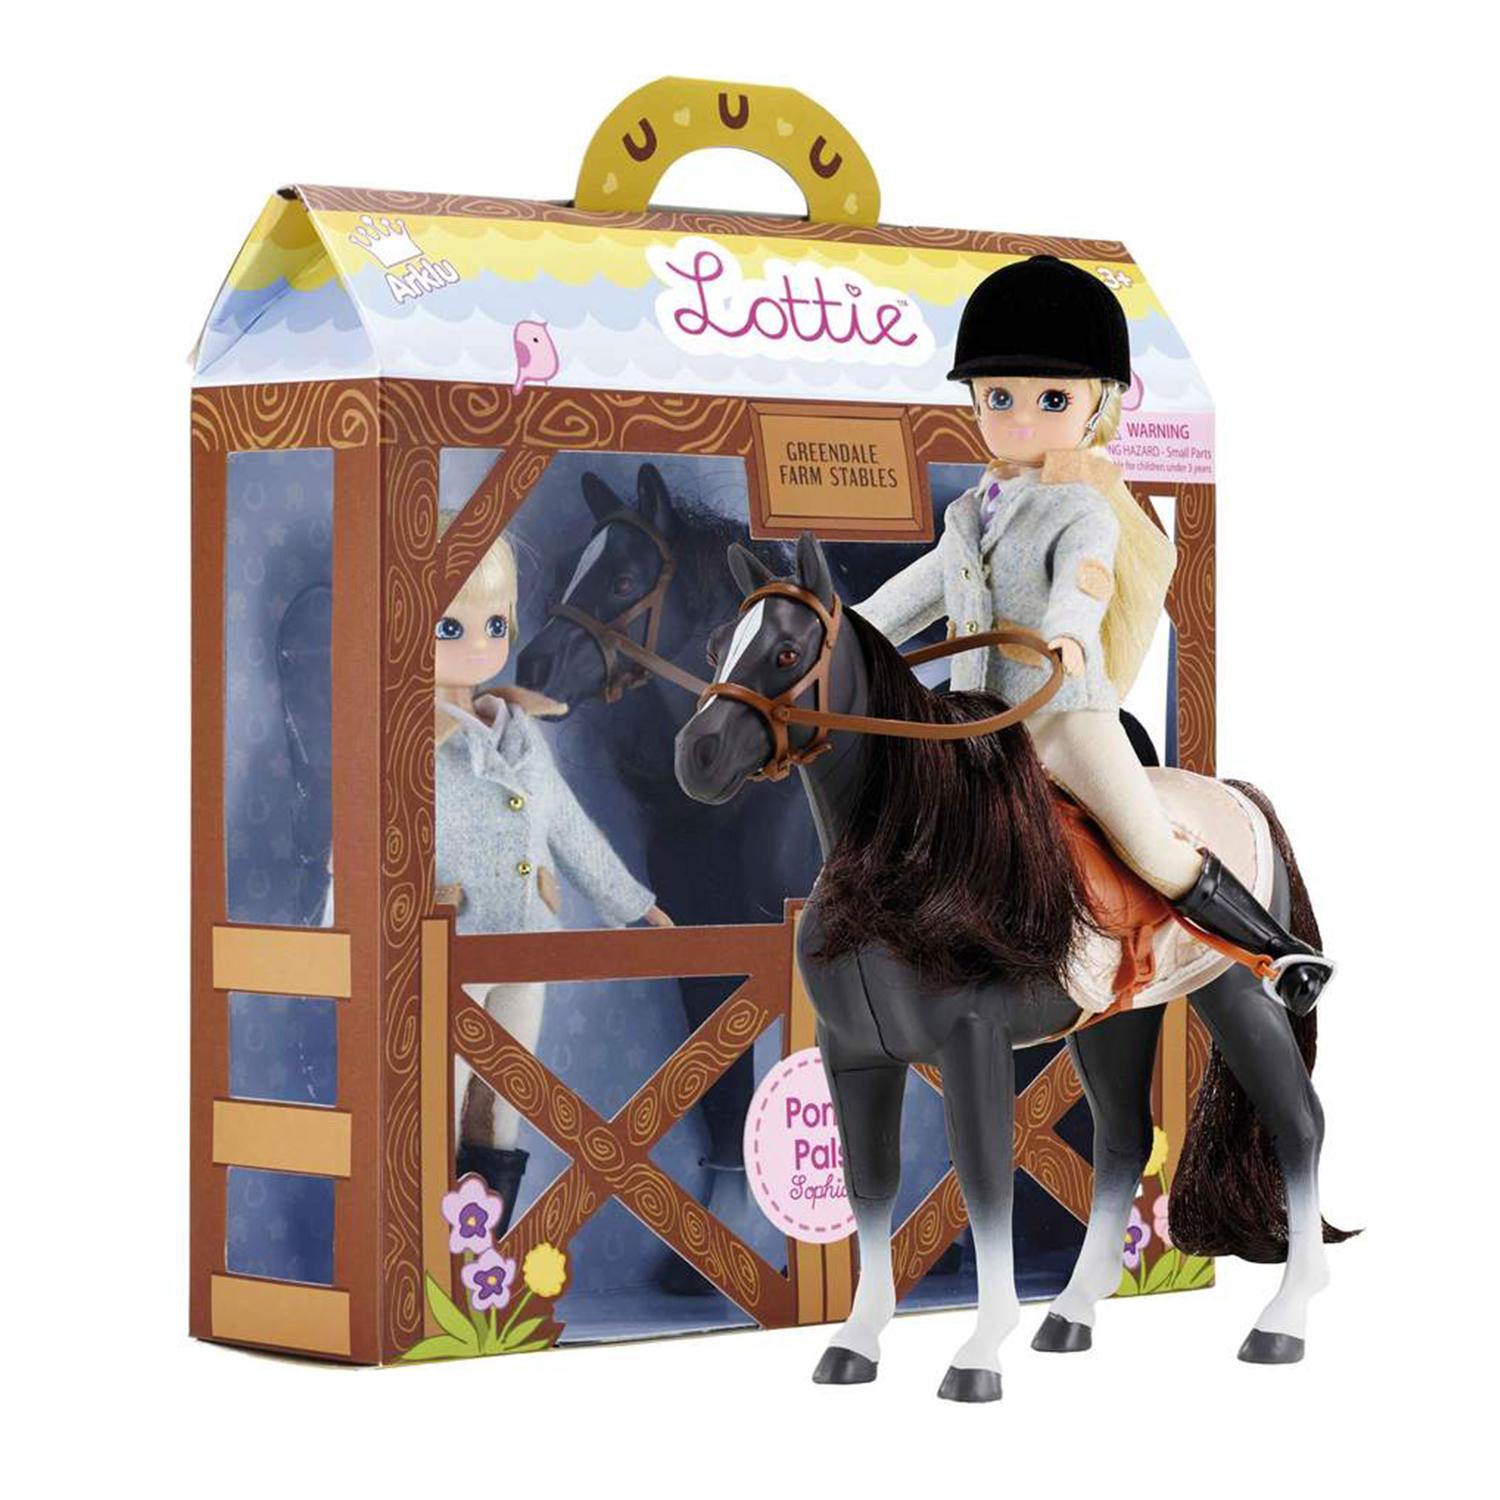 Lottie sitting on top of her pony alongside manufacturer's packaging.